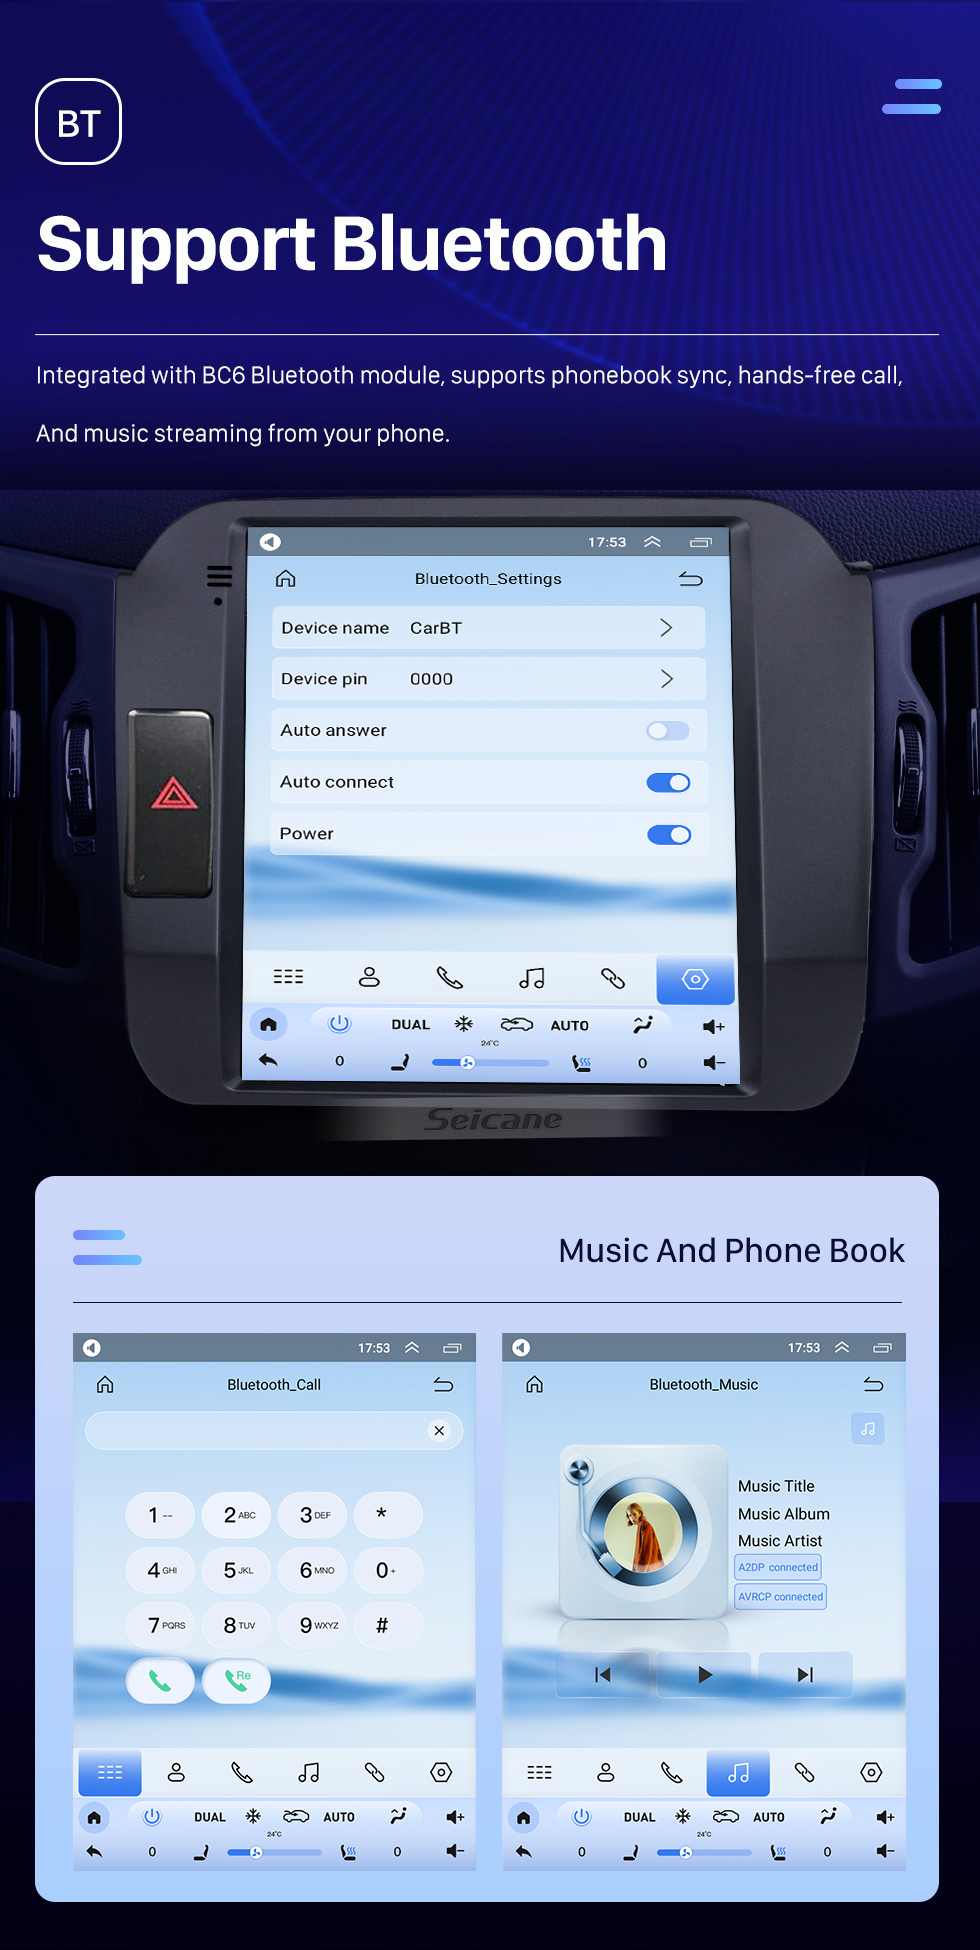 Seicane 9,7 Zoll HD Touchscreen Android 10.0 Autoradio für 2011-2017 KIA Sportage R LHD Navigationssystem Bluetooth Wifi Mirror Link USB-Unterstützung DVD-Player Carplay 4G